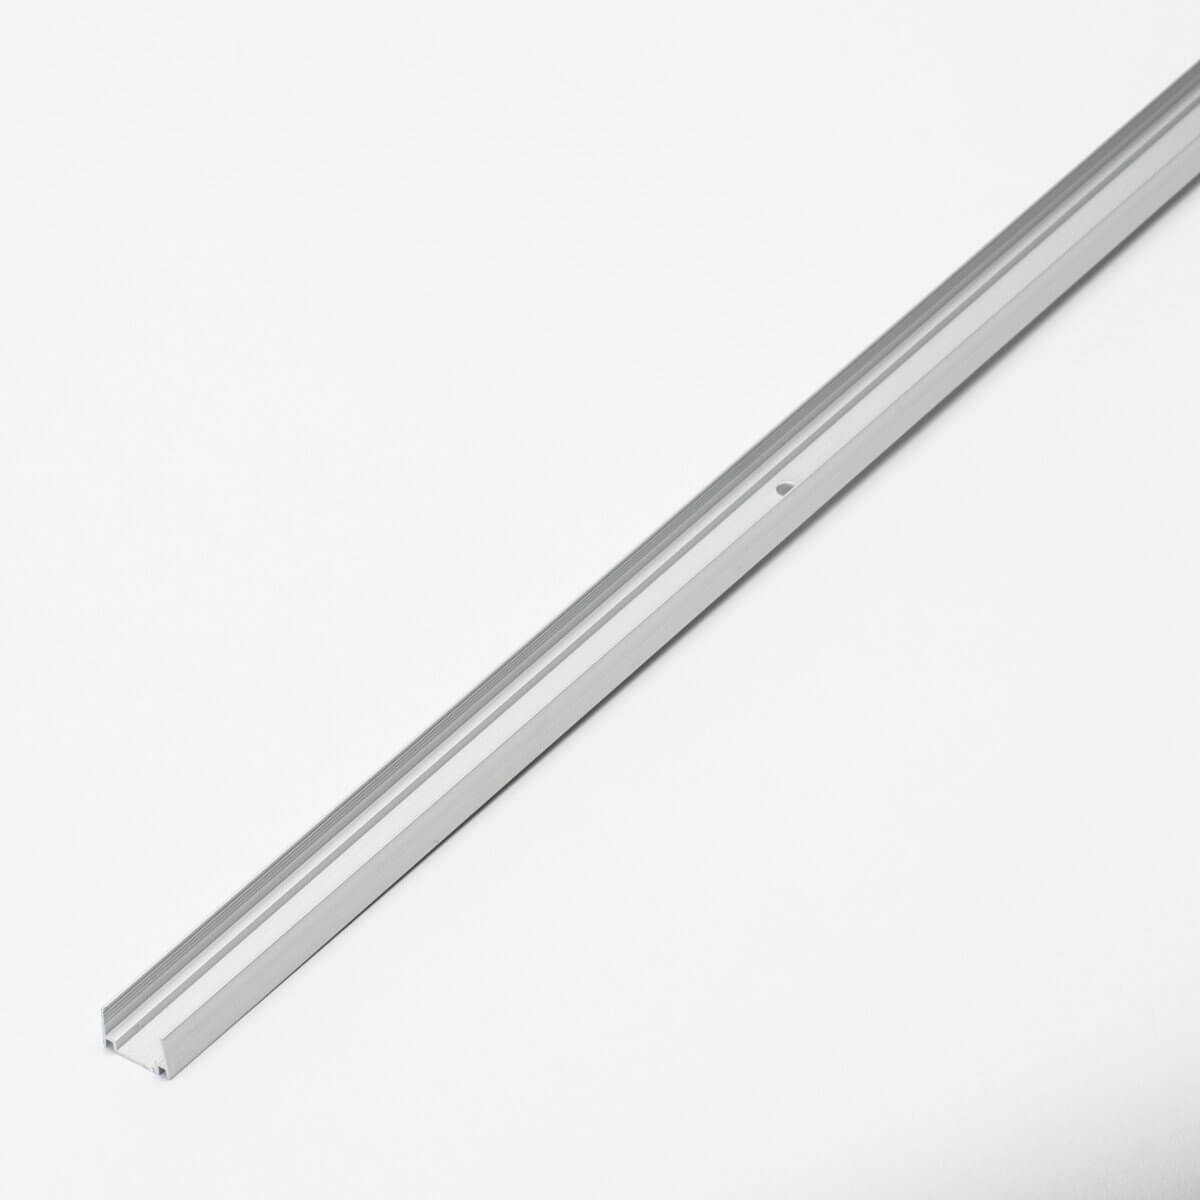 Lumonic 6x1m Perfil de aluminio LED blanco con tapa I canaleta para tira  LED con tapas+abrazaderas I perfil de aluminio LED, canaleta tira LED  lechoso